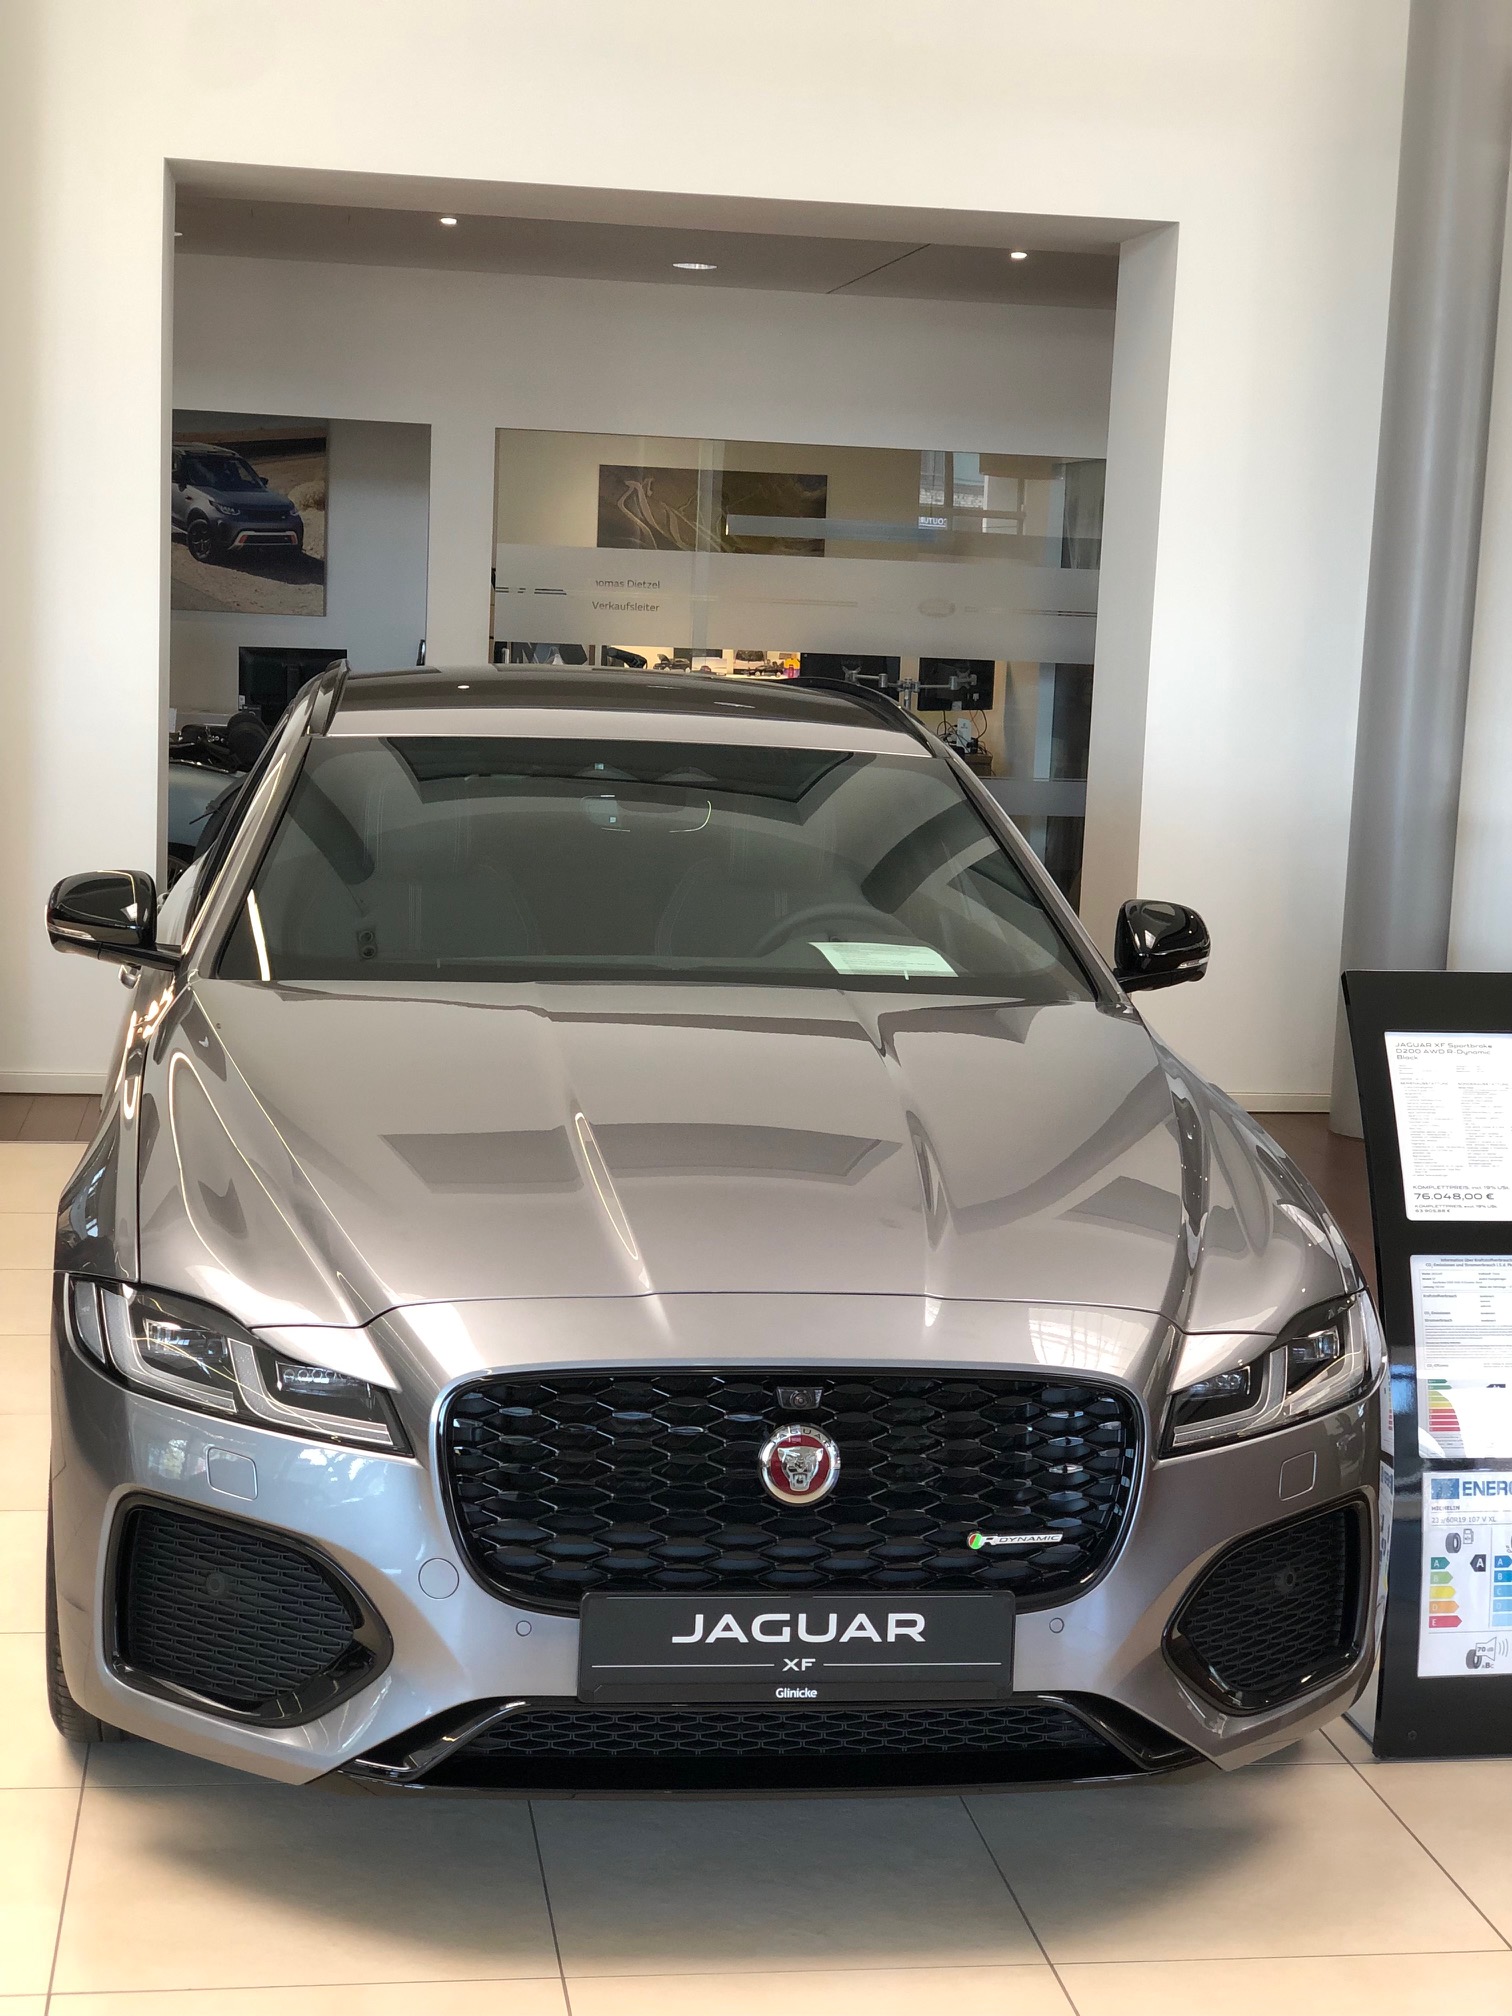 Bilder Jaguar Autohaus | Glinicke | British Cars